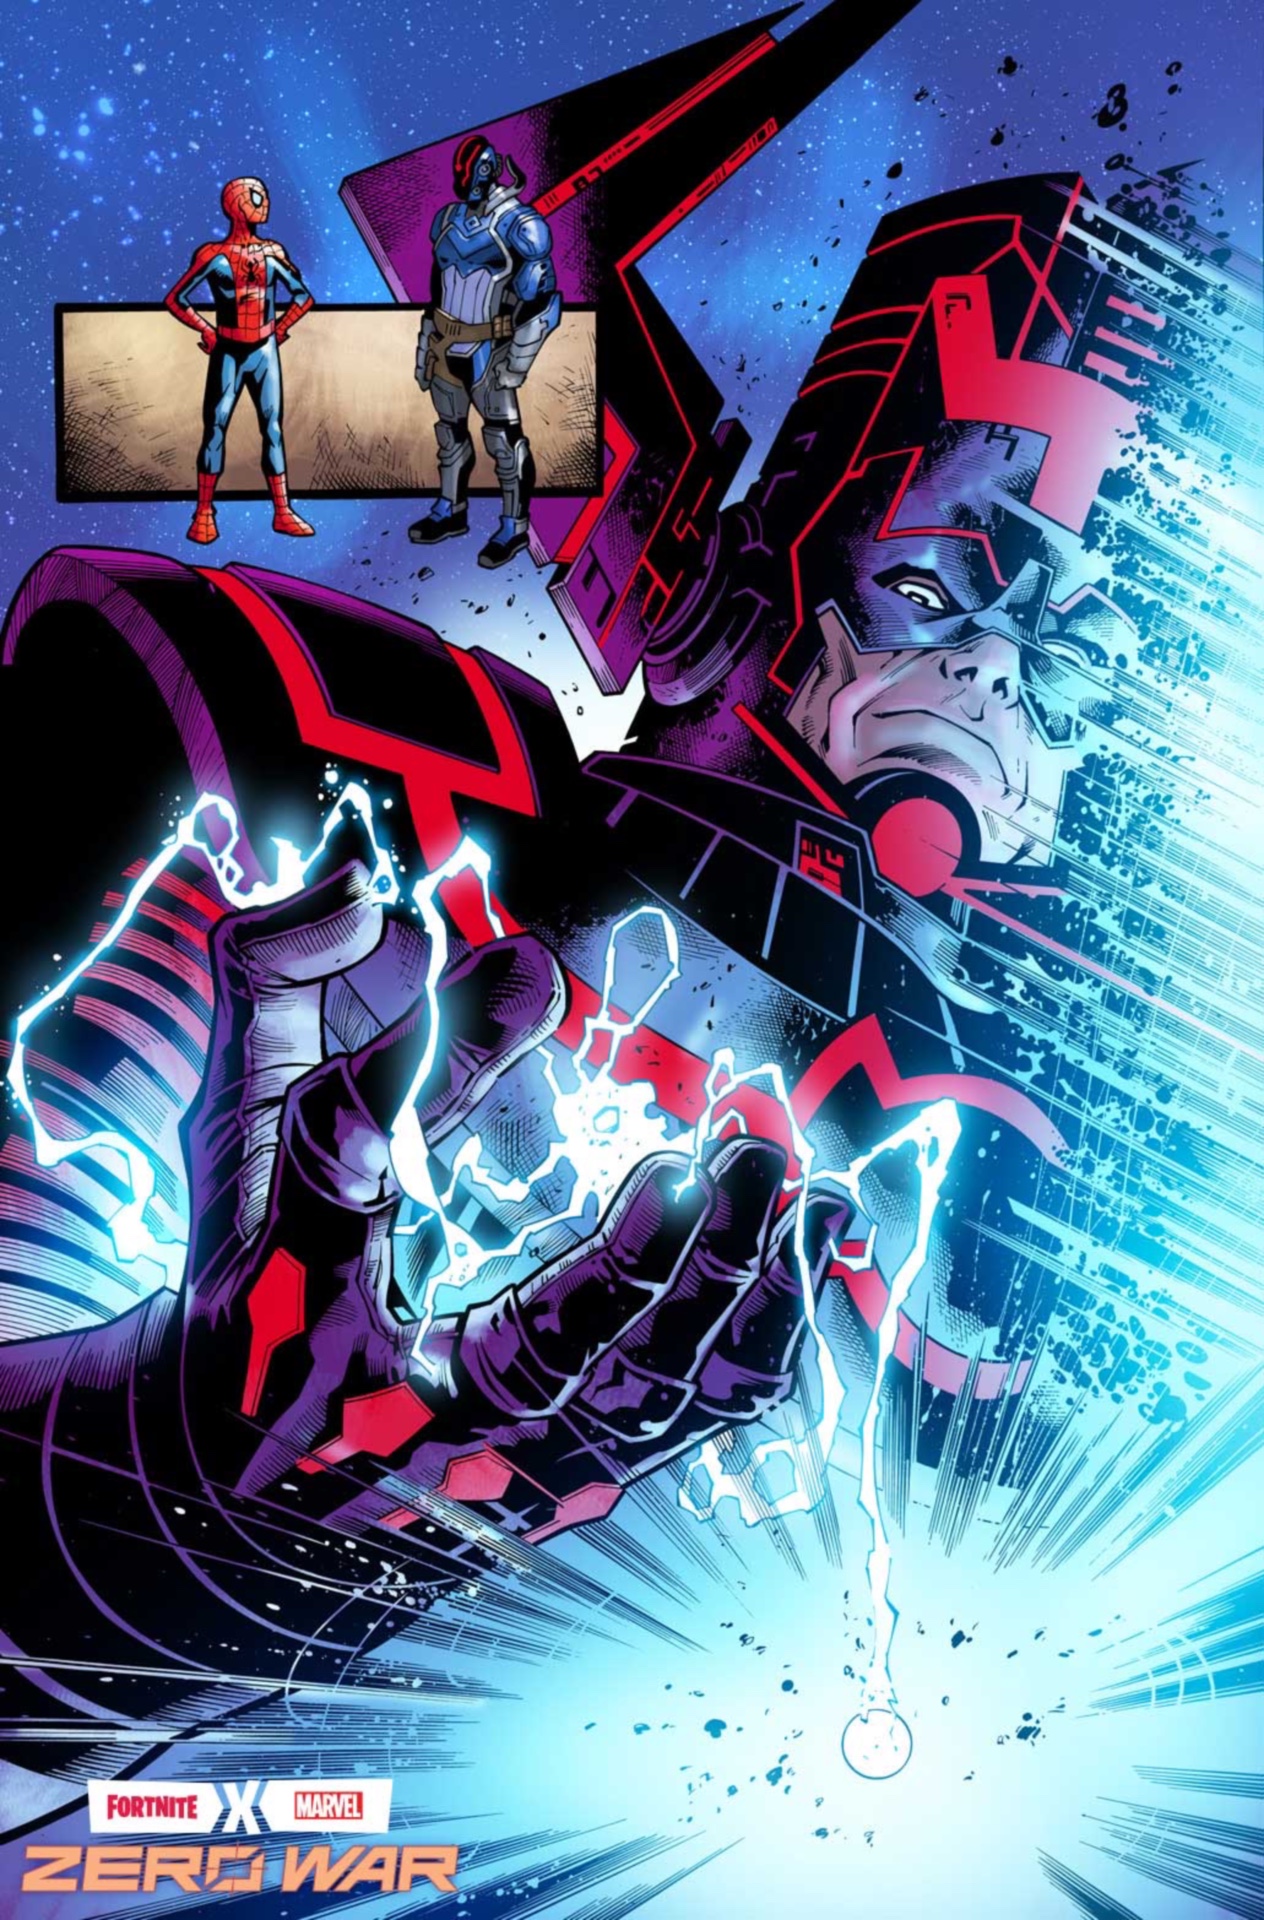 Fortnite X Marvel Zero War #1 preview page